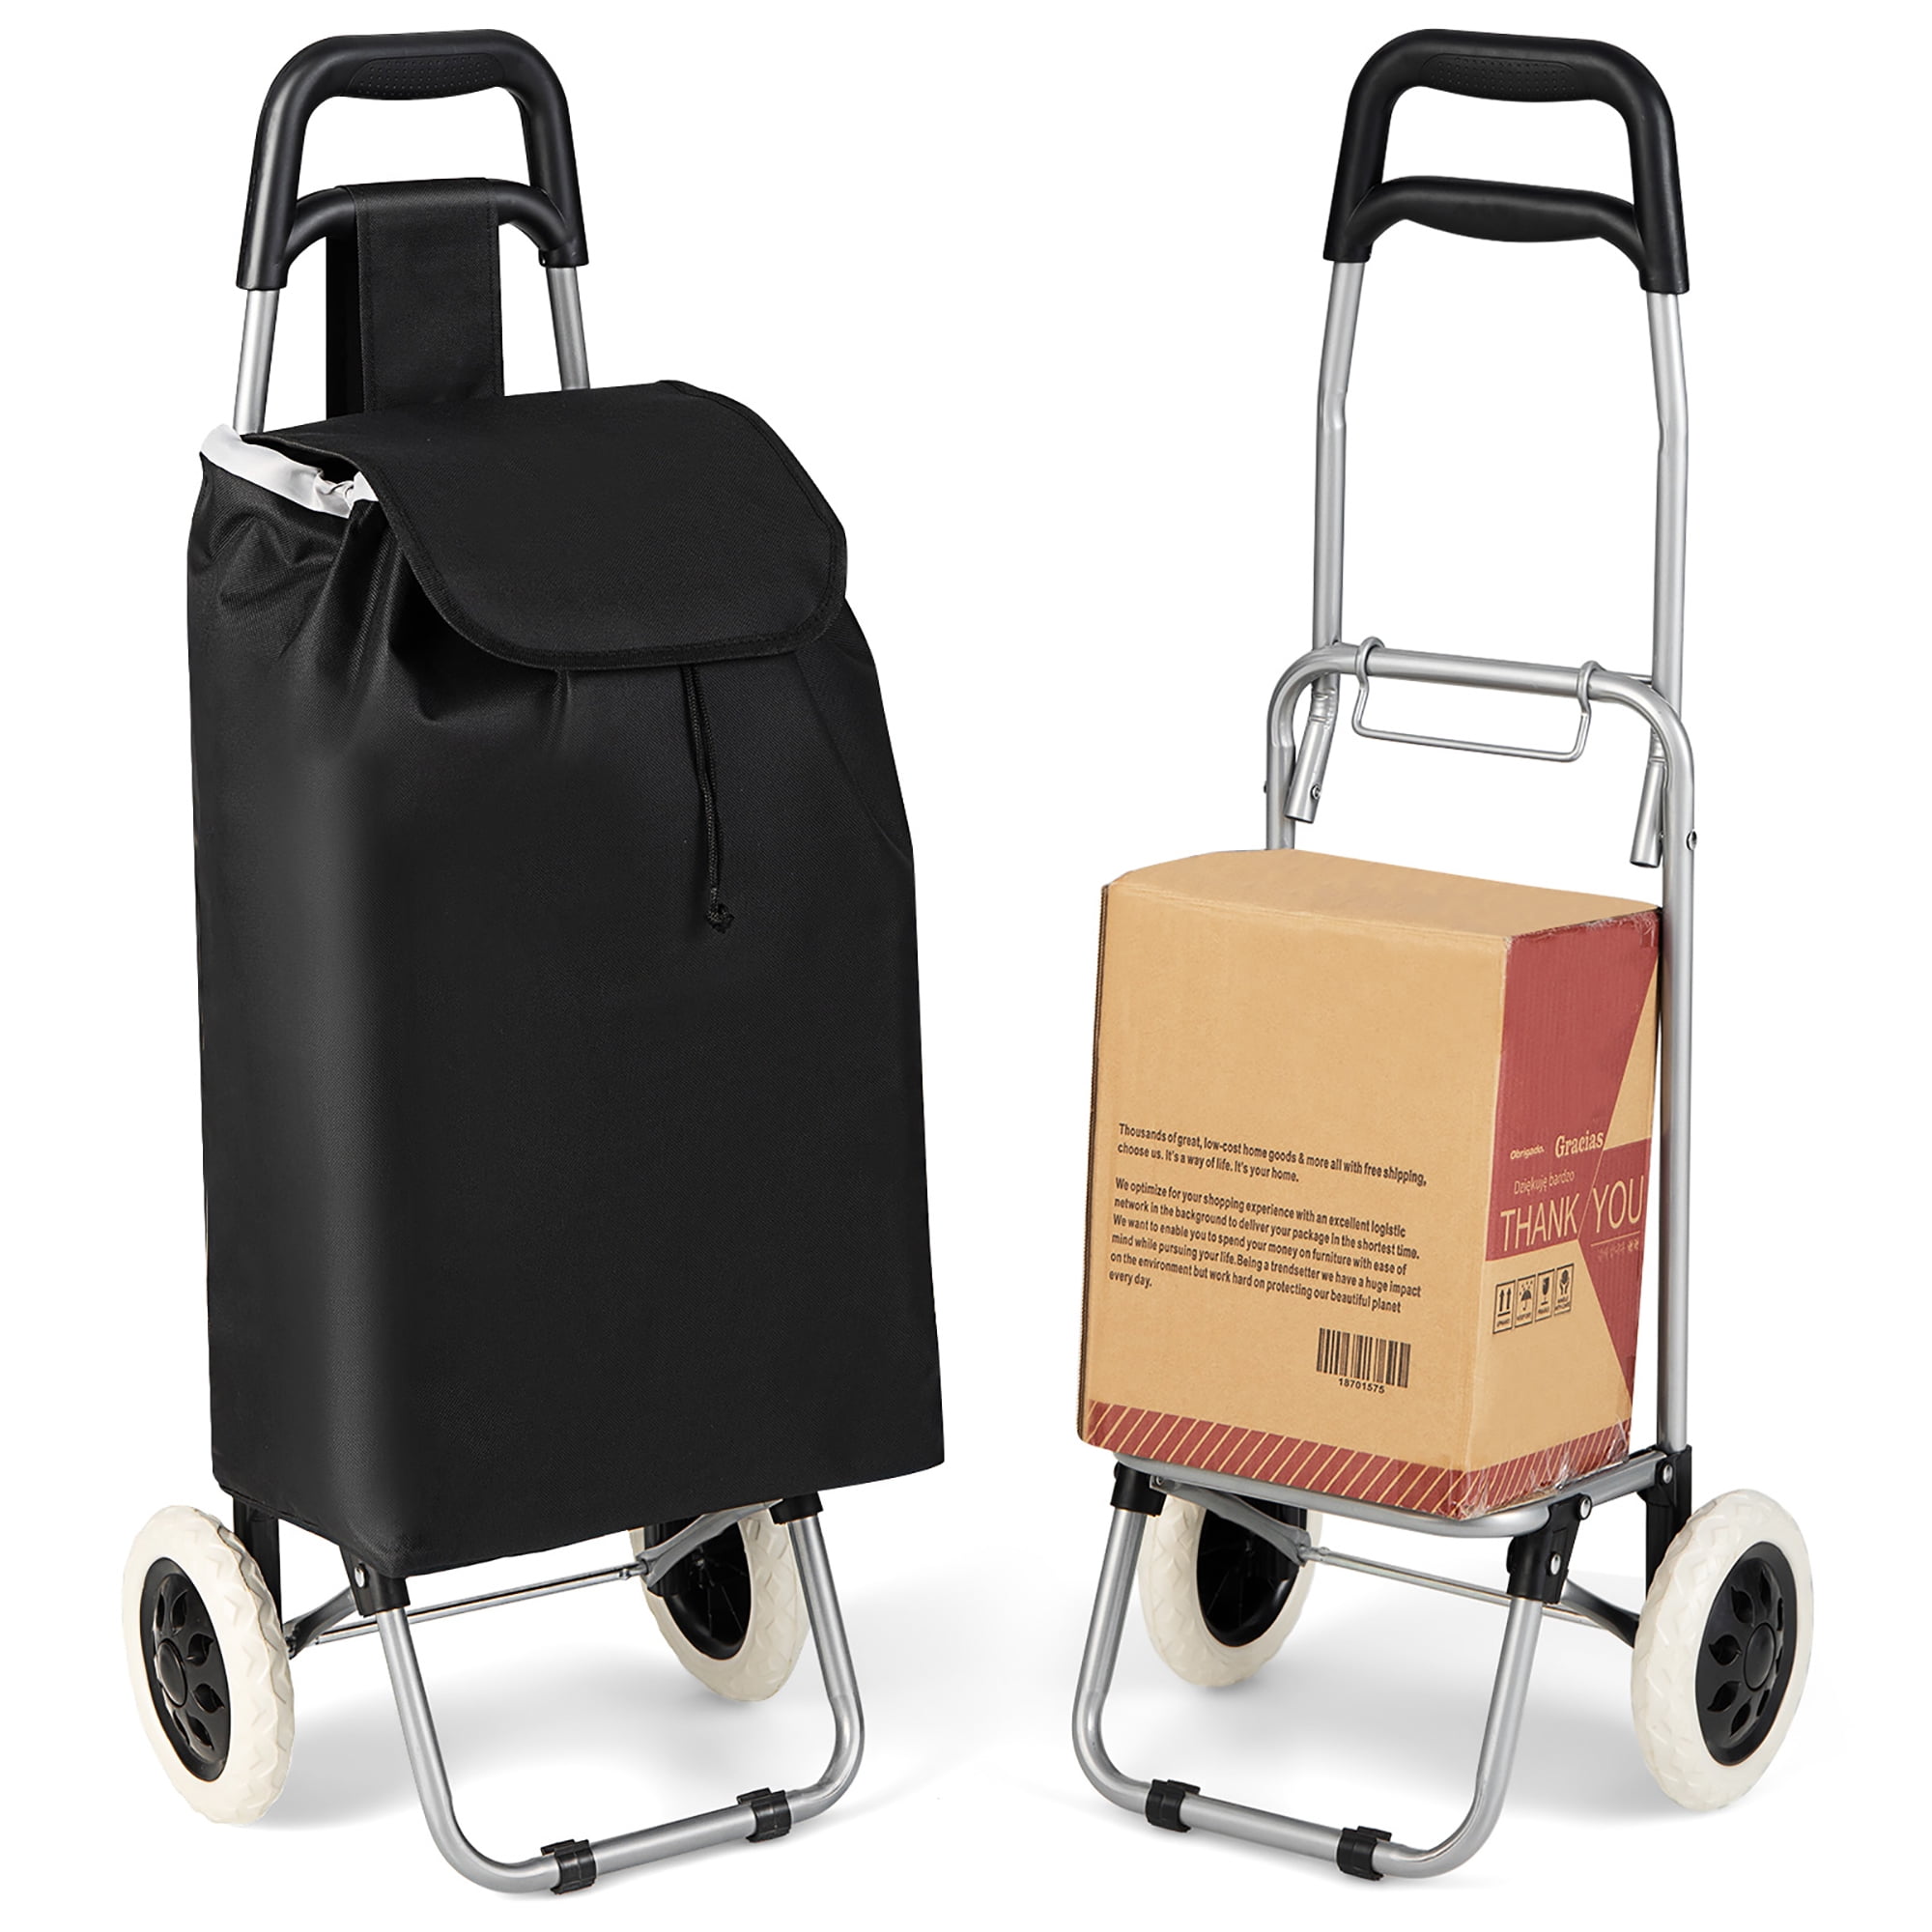 Lightweight & Foldable Shopping Trolley 2 Wheels 2 WHEEL SHOPPING TROLLEY water resistant with Detachable Bag 